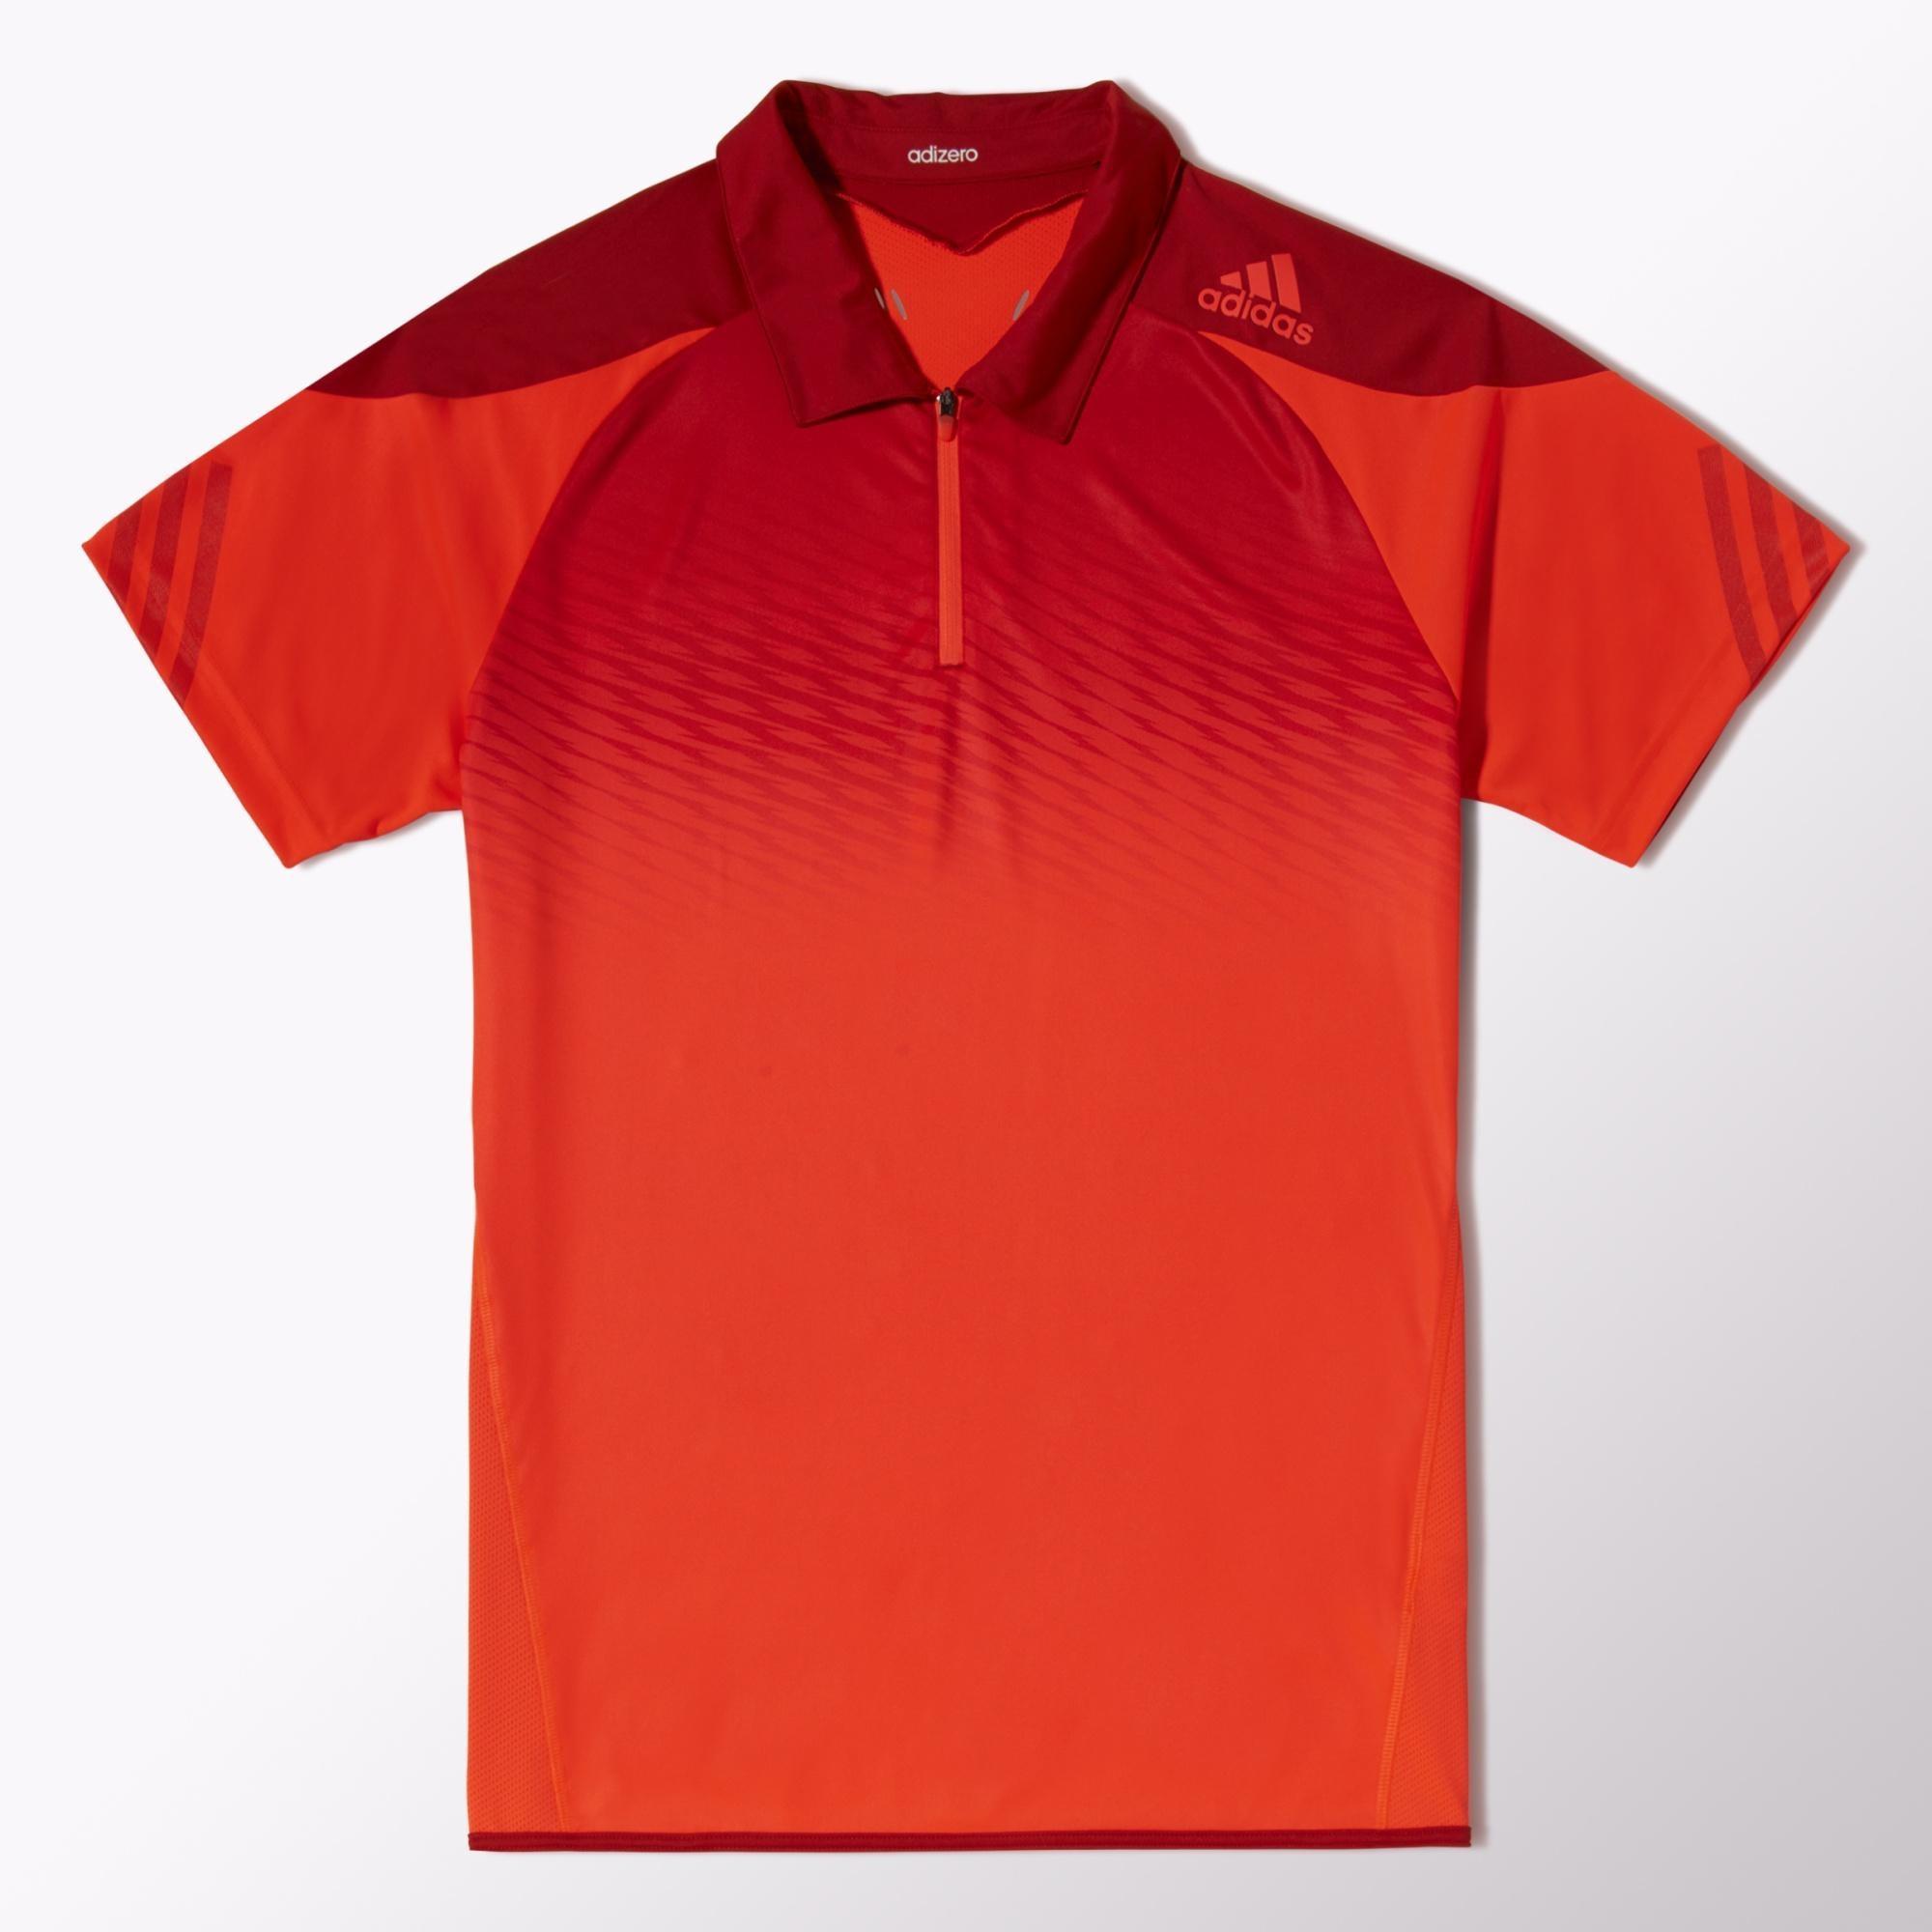  Adidas  Mens Adizero Polo  Shirt  Solar Red  Bold Orange 